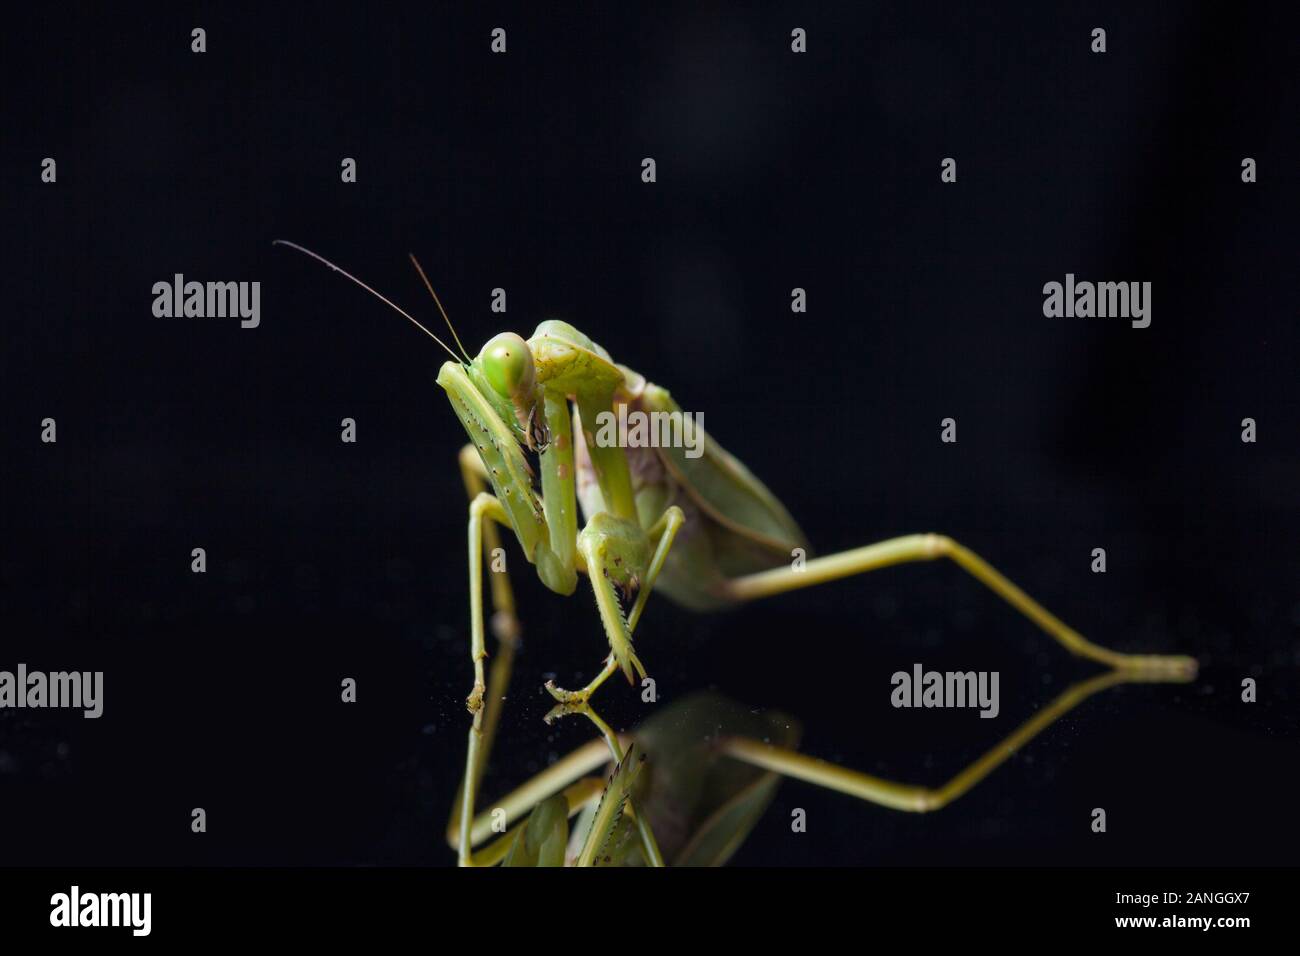 Giant Asian Green Praying Mantis (Hierodula membranacea) isolated on Black background. Stock Photo